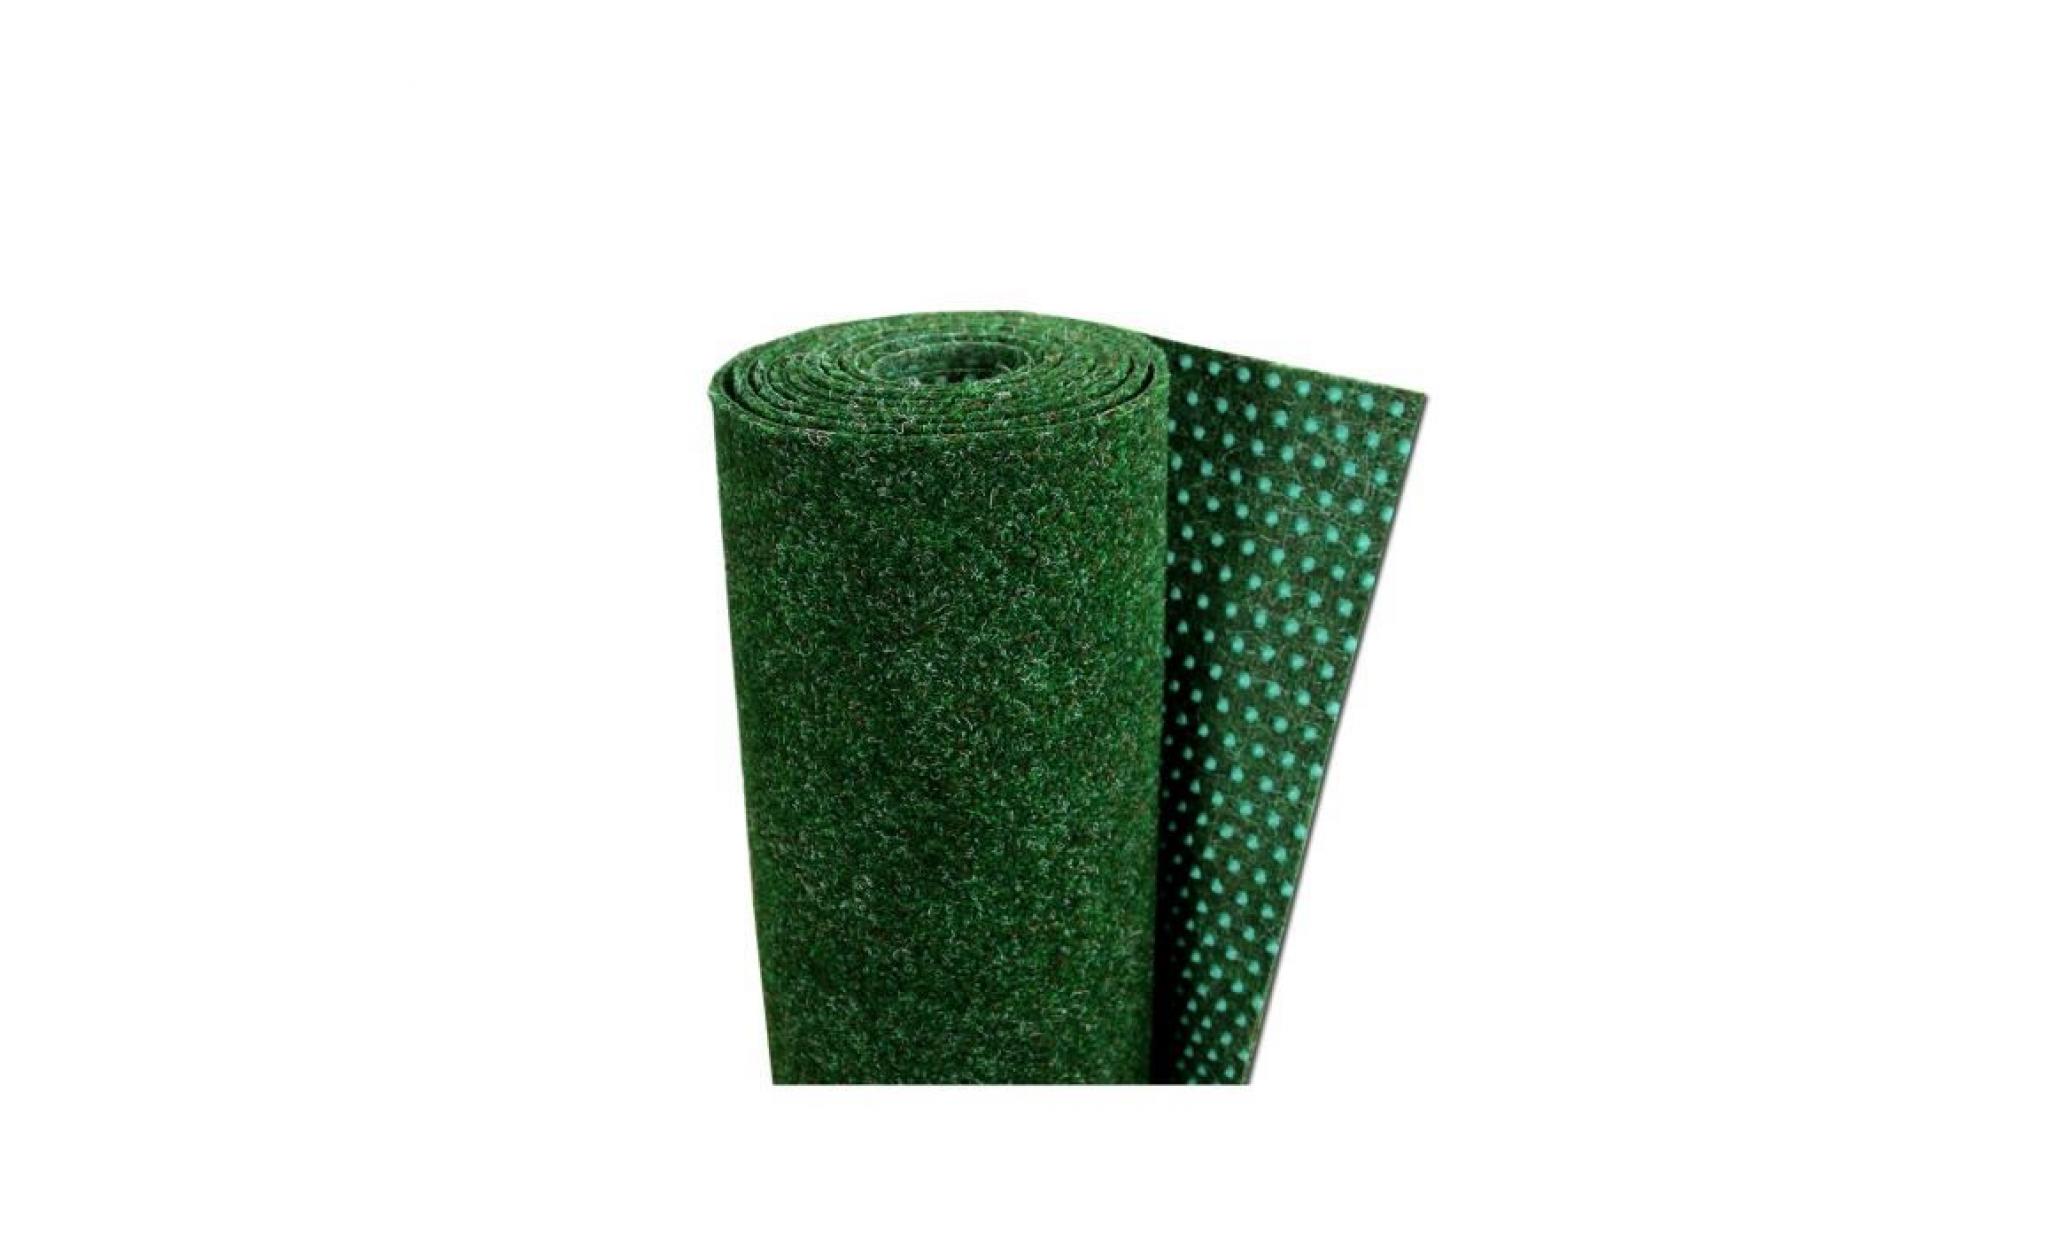 kingston   tapis type gazon artificiel – pour jardin, terrasse, balcon   anthracite [400x50 cm] pas cher